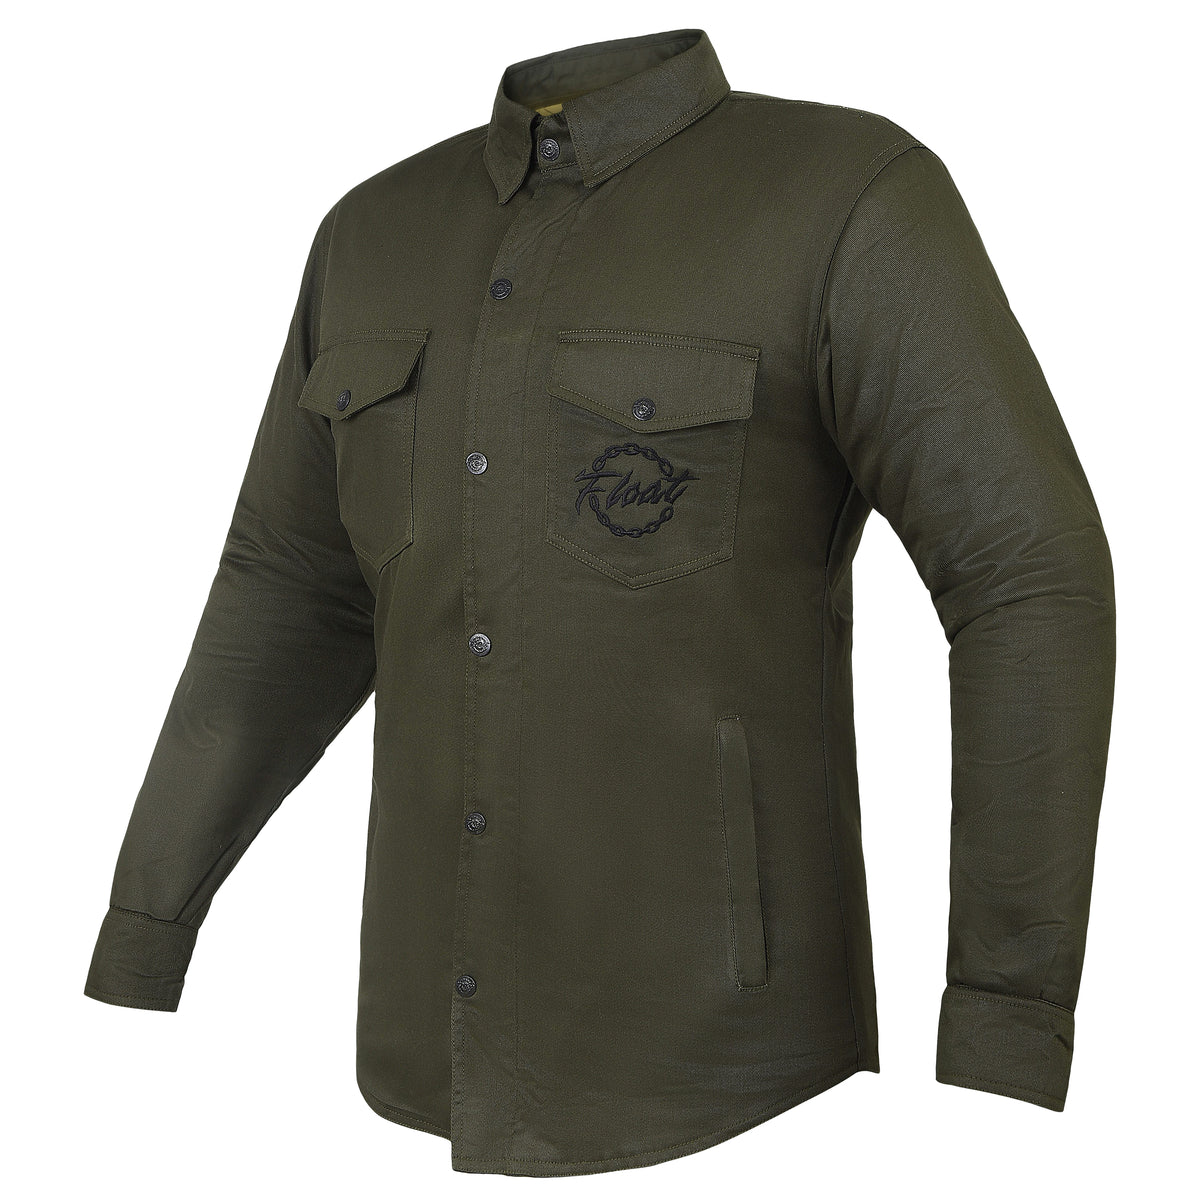 Revolution Pocket Fleece Army - TALI Concept Store